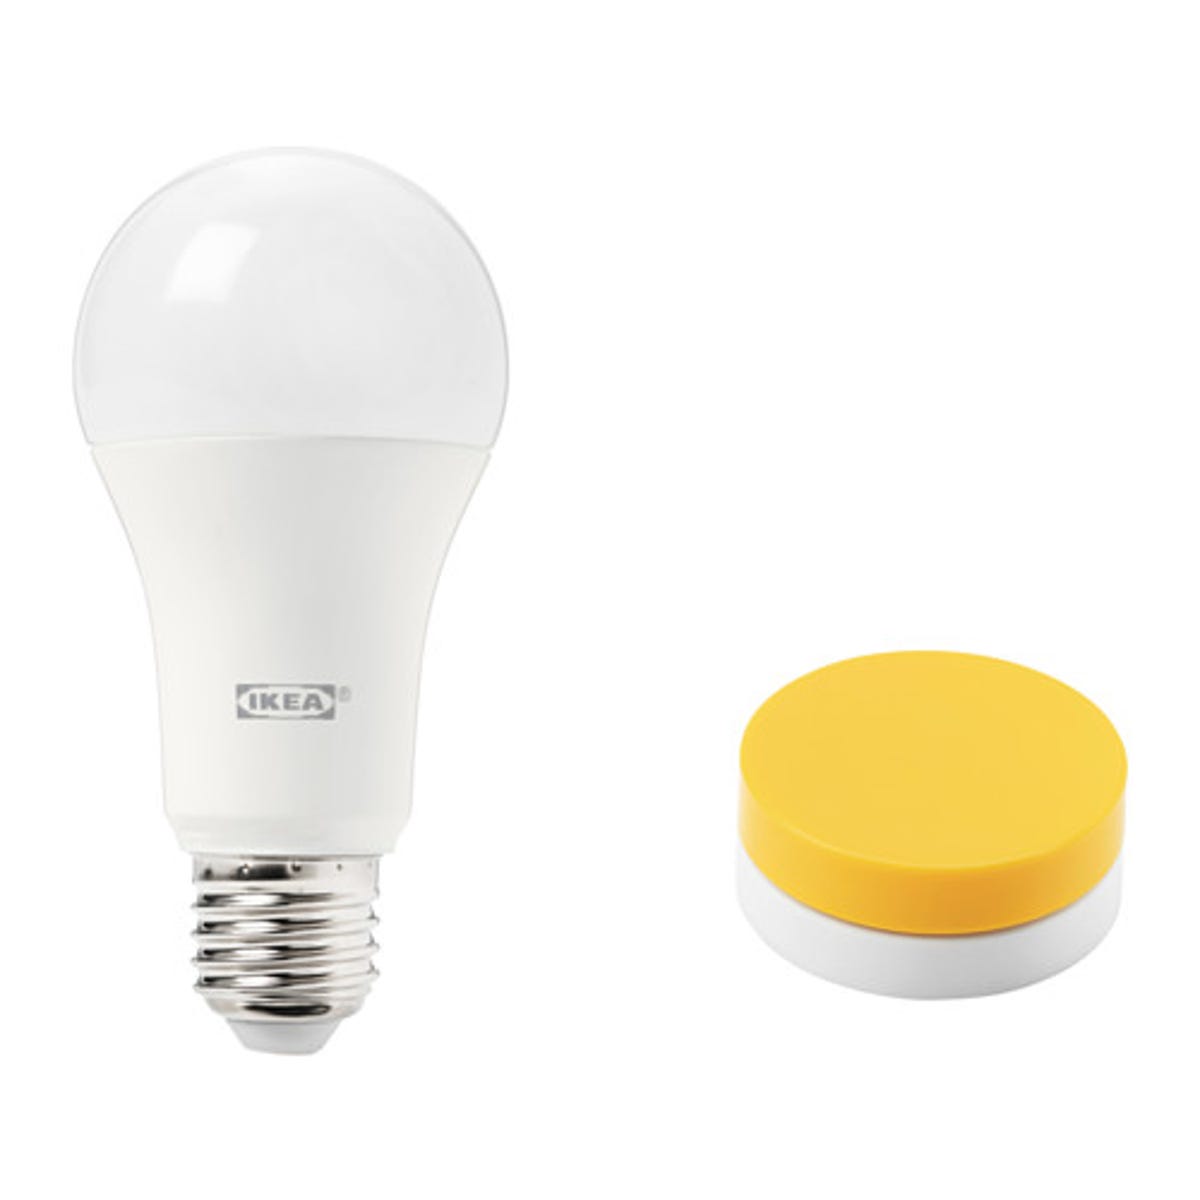 Here's Ikea's brand-new smart lighting CNET